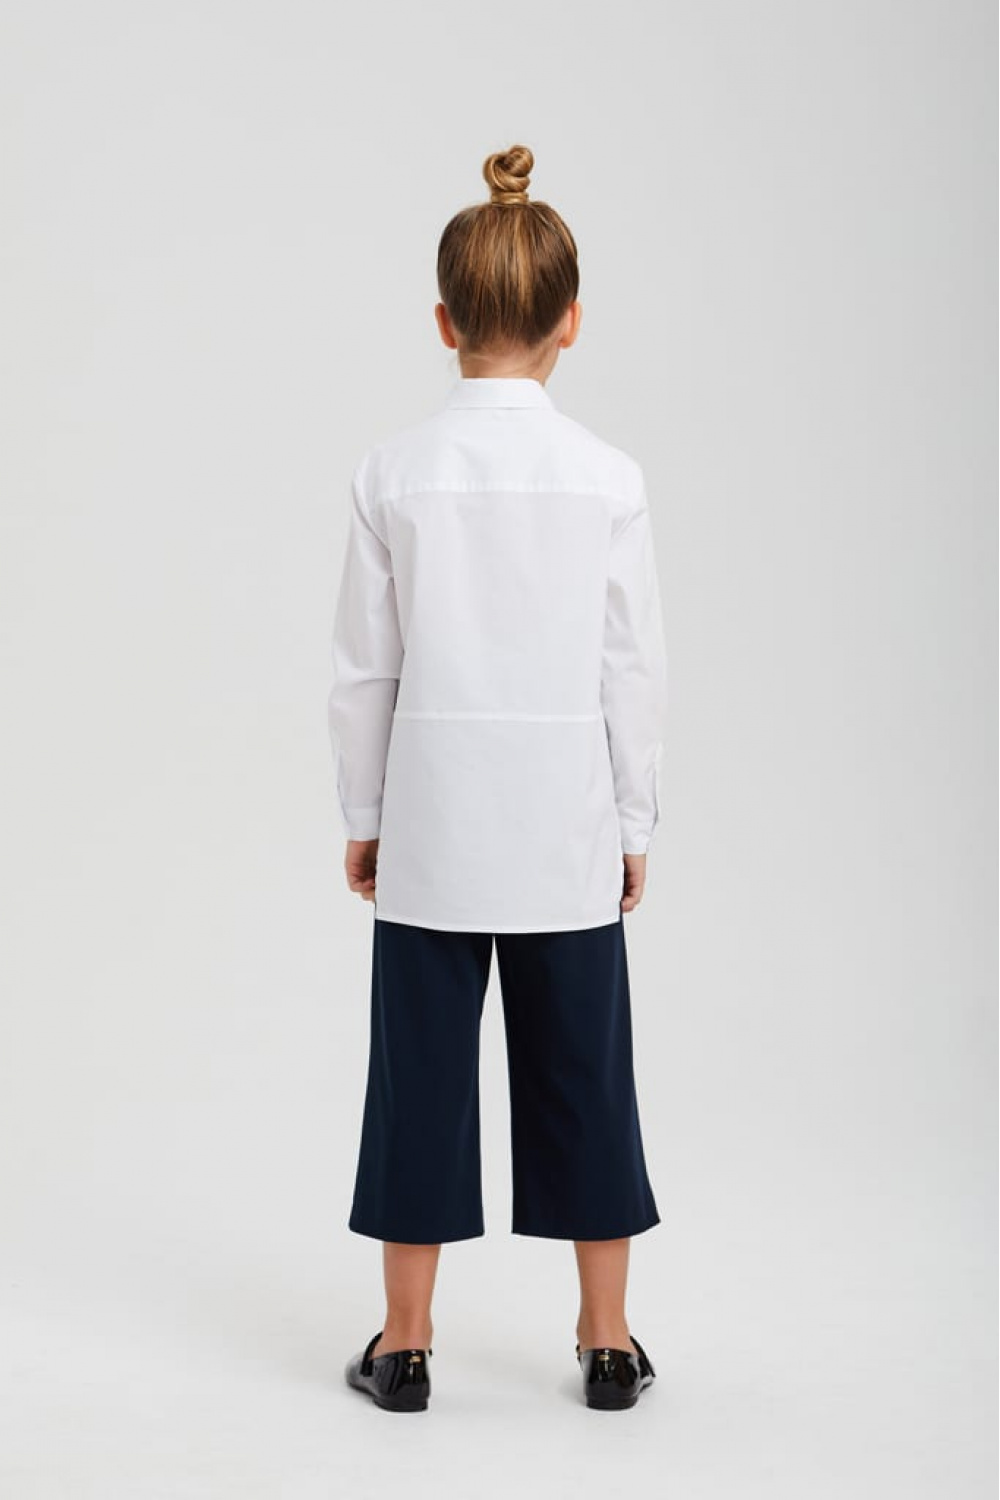 Рубашка из хлопка с минималистичным декором воротника (SSFSG-029-23016-200) Silver Spoon